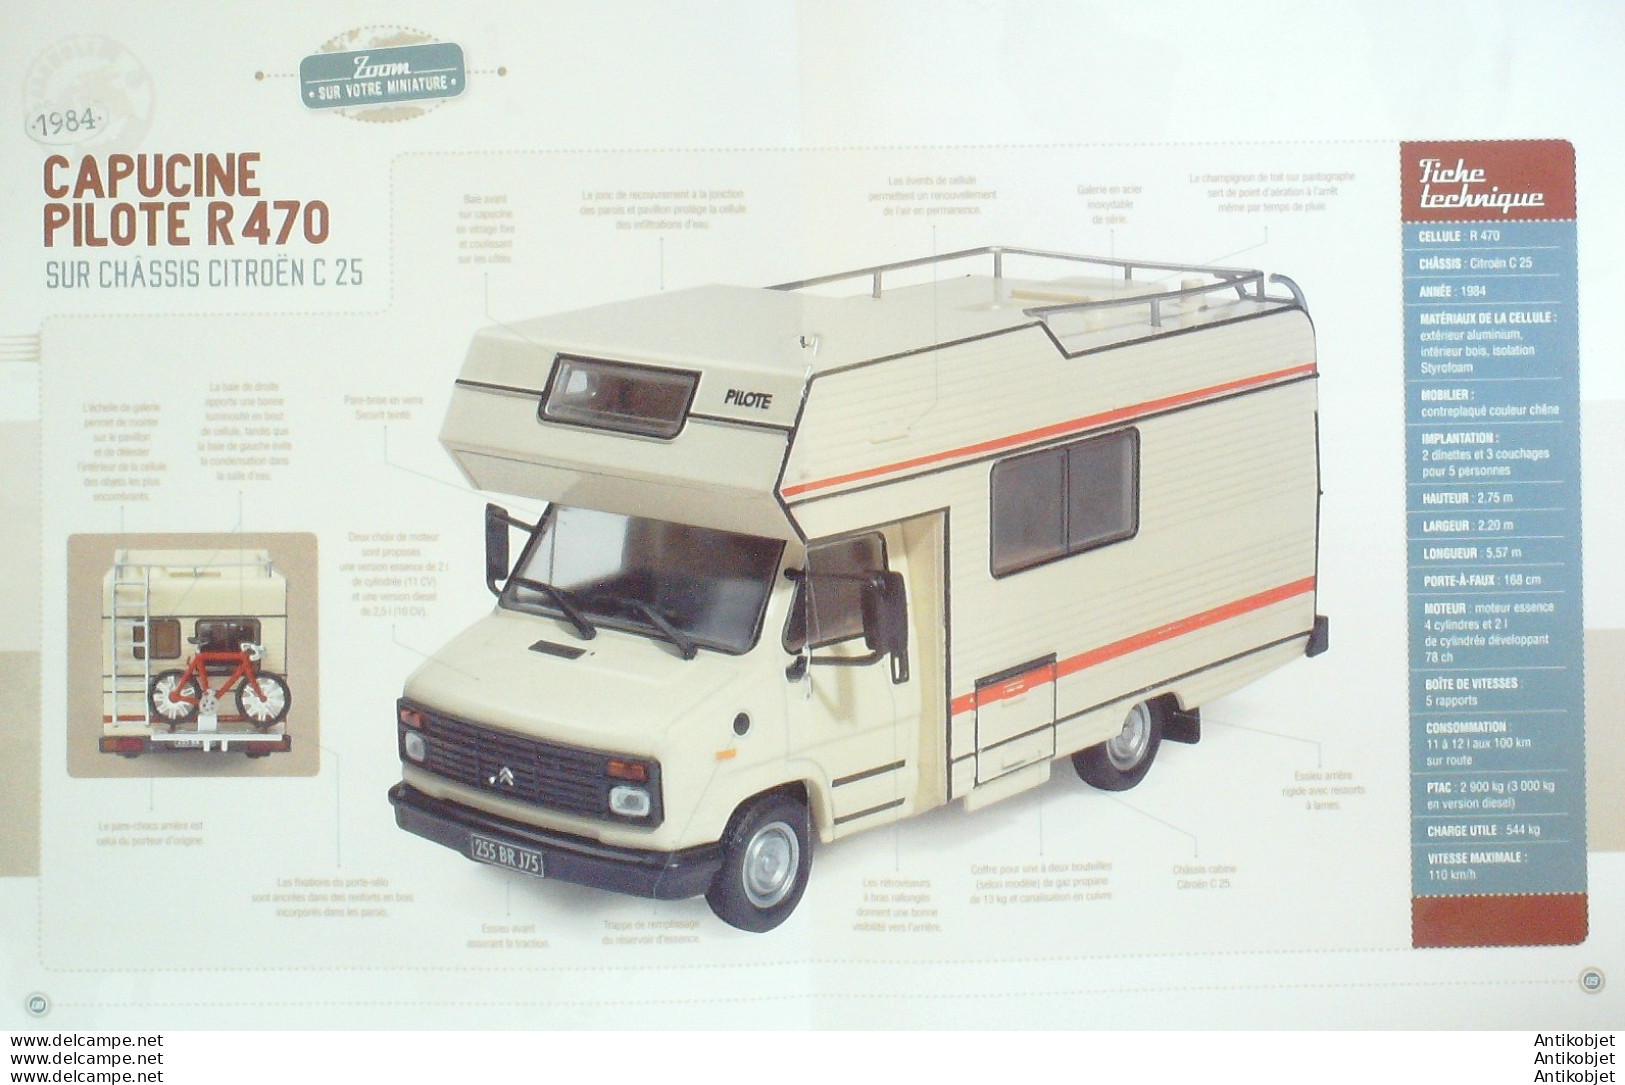 Camping-cars Caoucine Pilote R470 édition Hachette - History